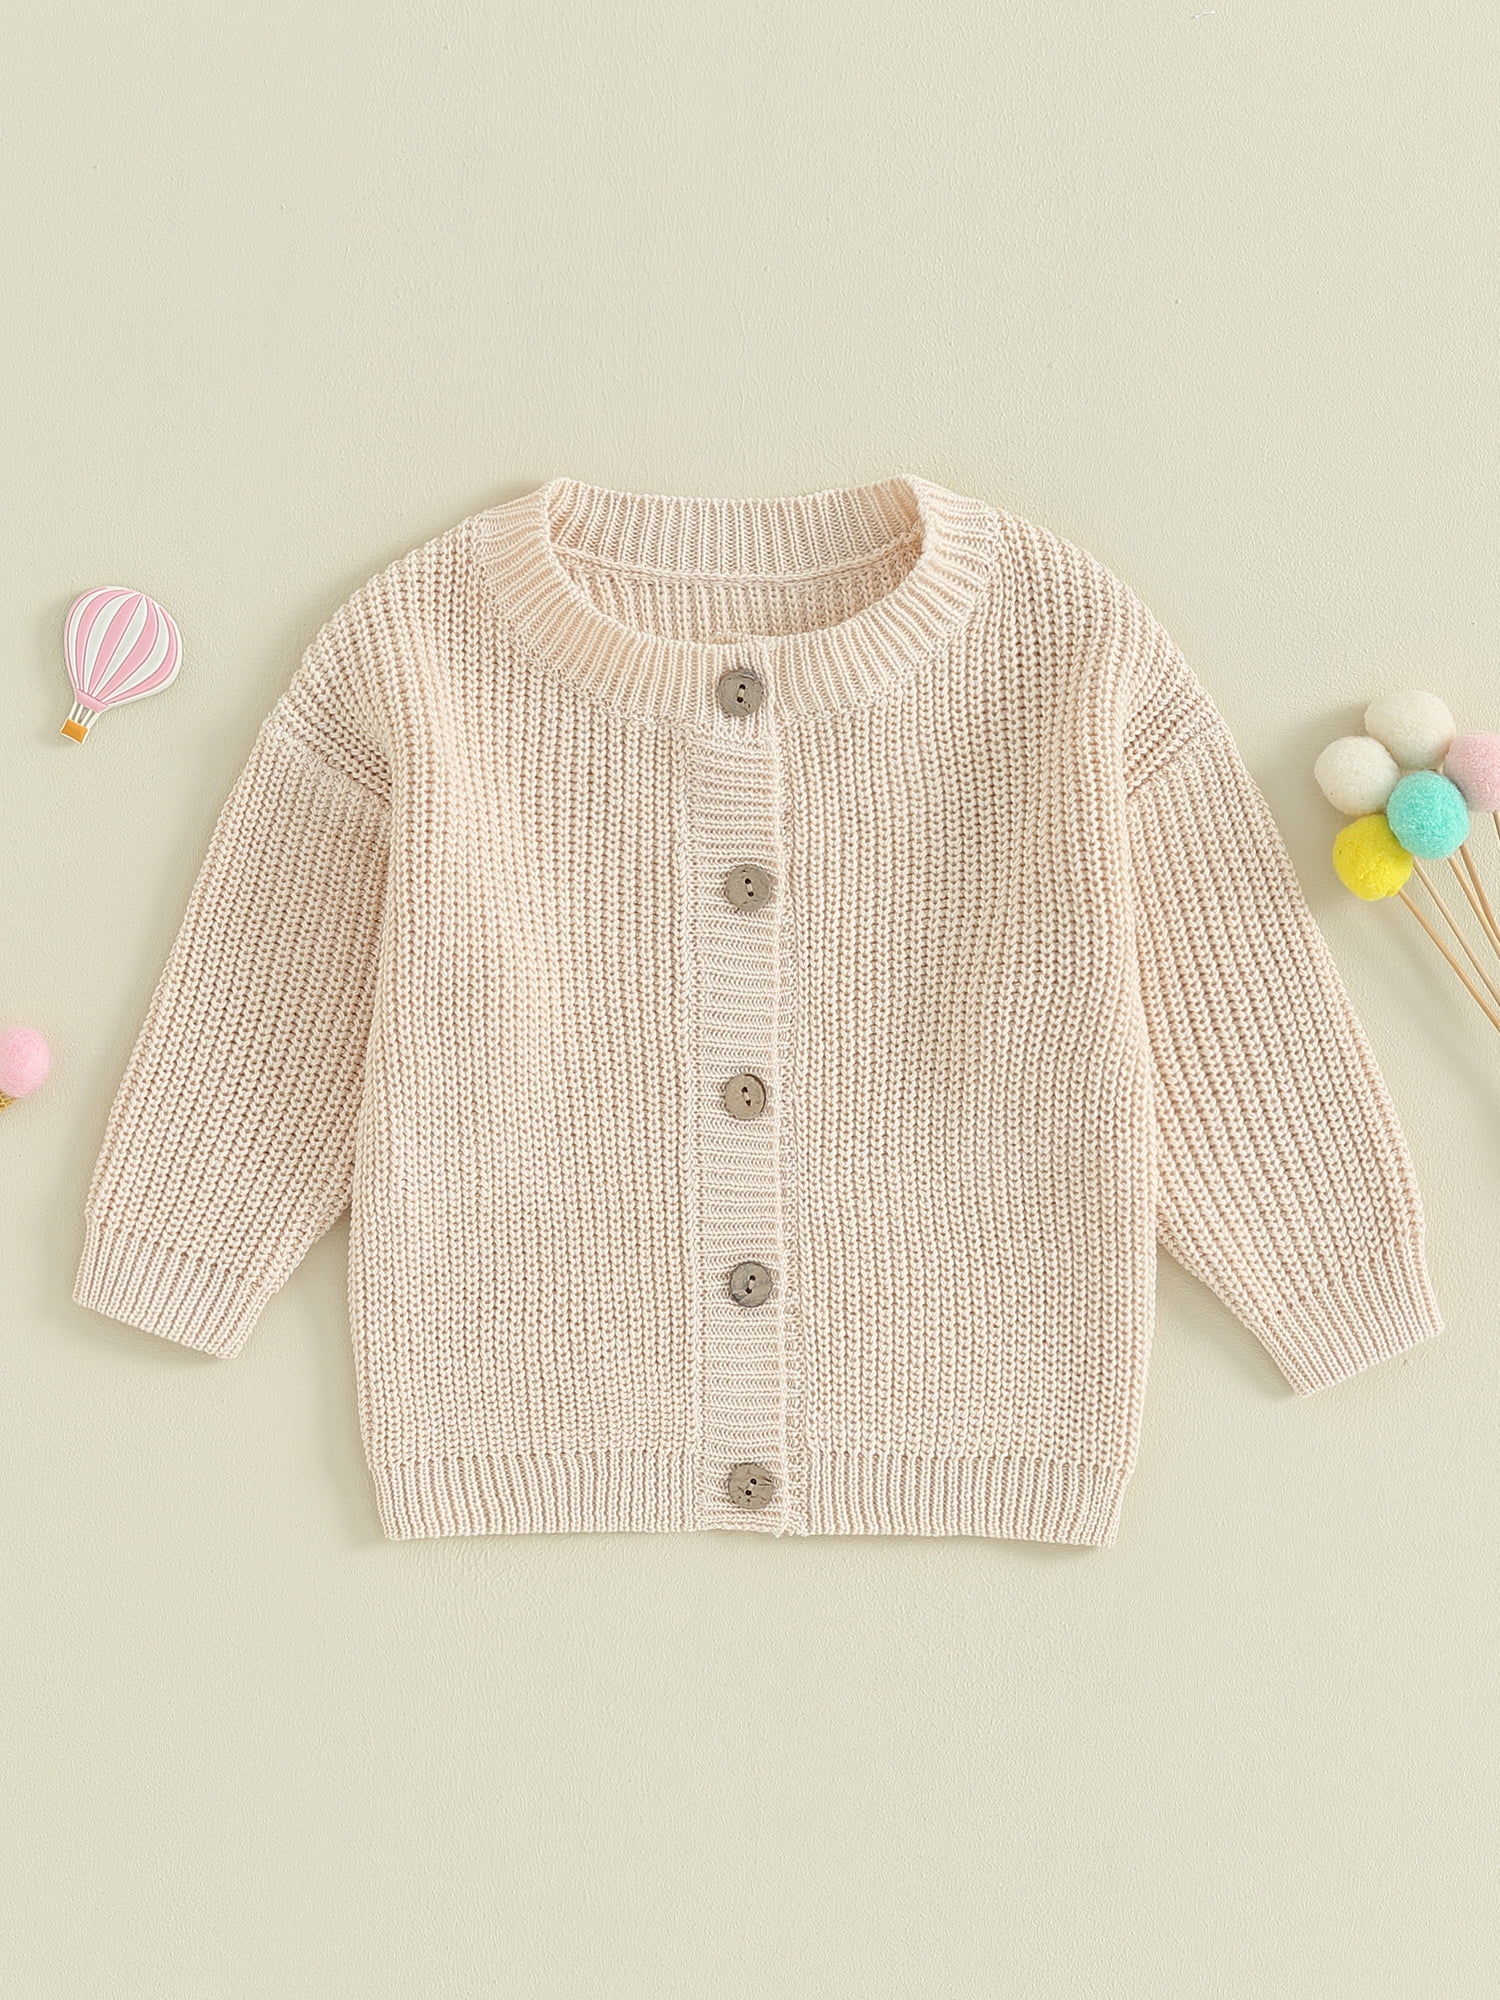 Toddler Boy/Girl Button Design Knit Sweater Cardigan